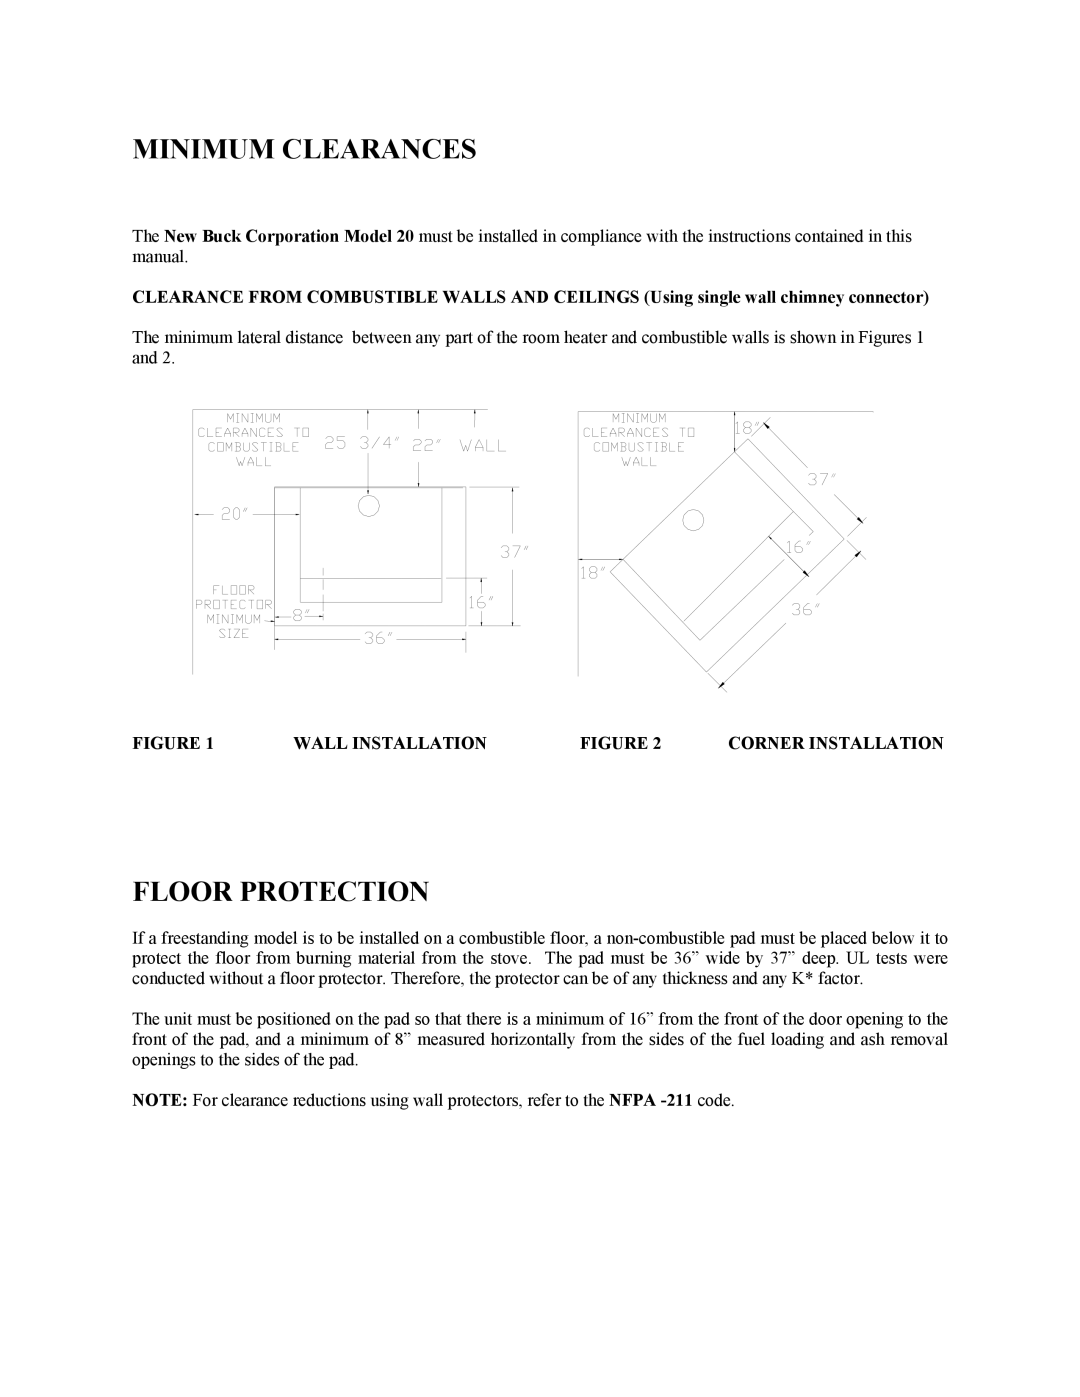 New Buck Corporation 20 Room Heater manual Floor Protection, Wall Installation, Corner Installation, Minimum Clearances 